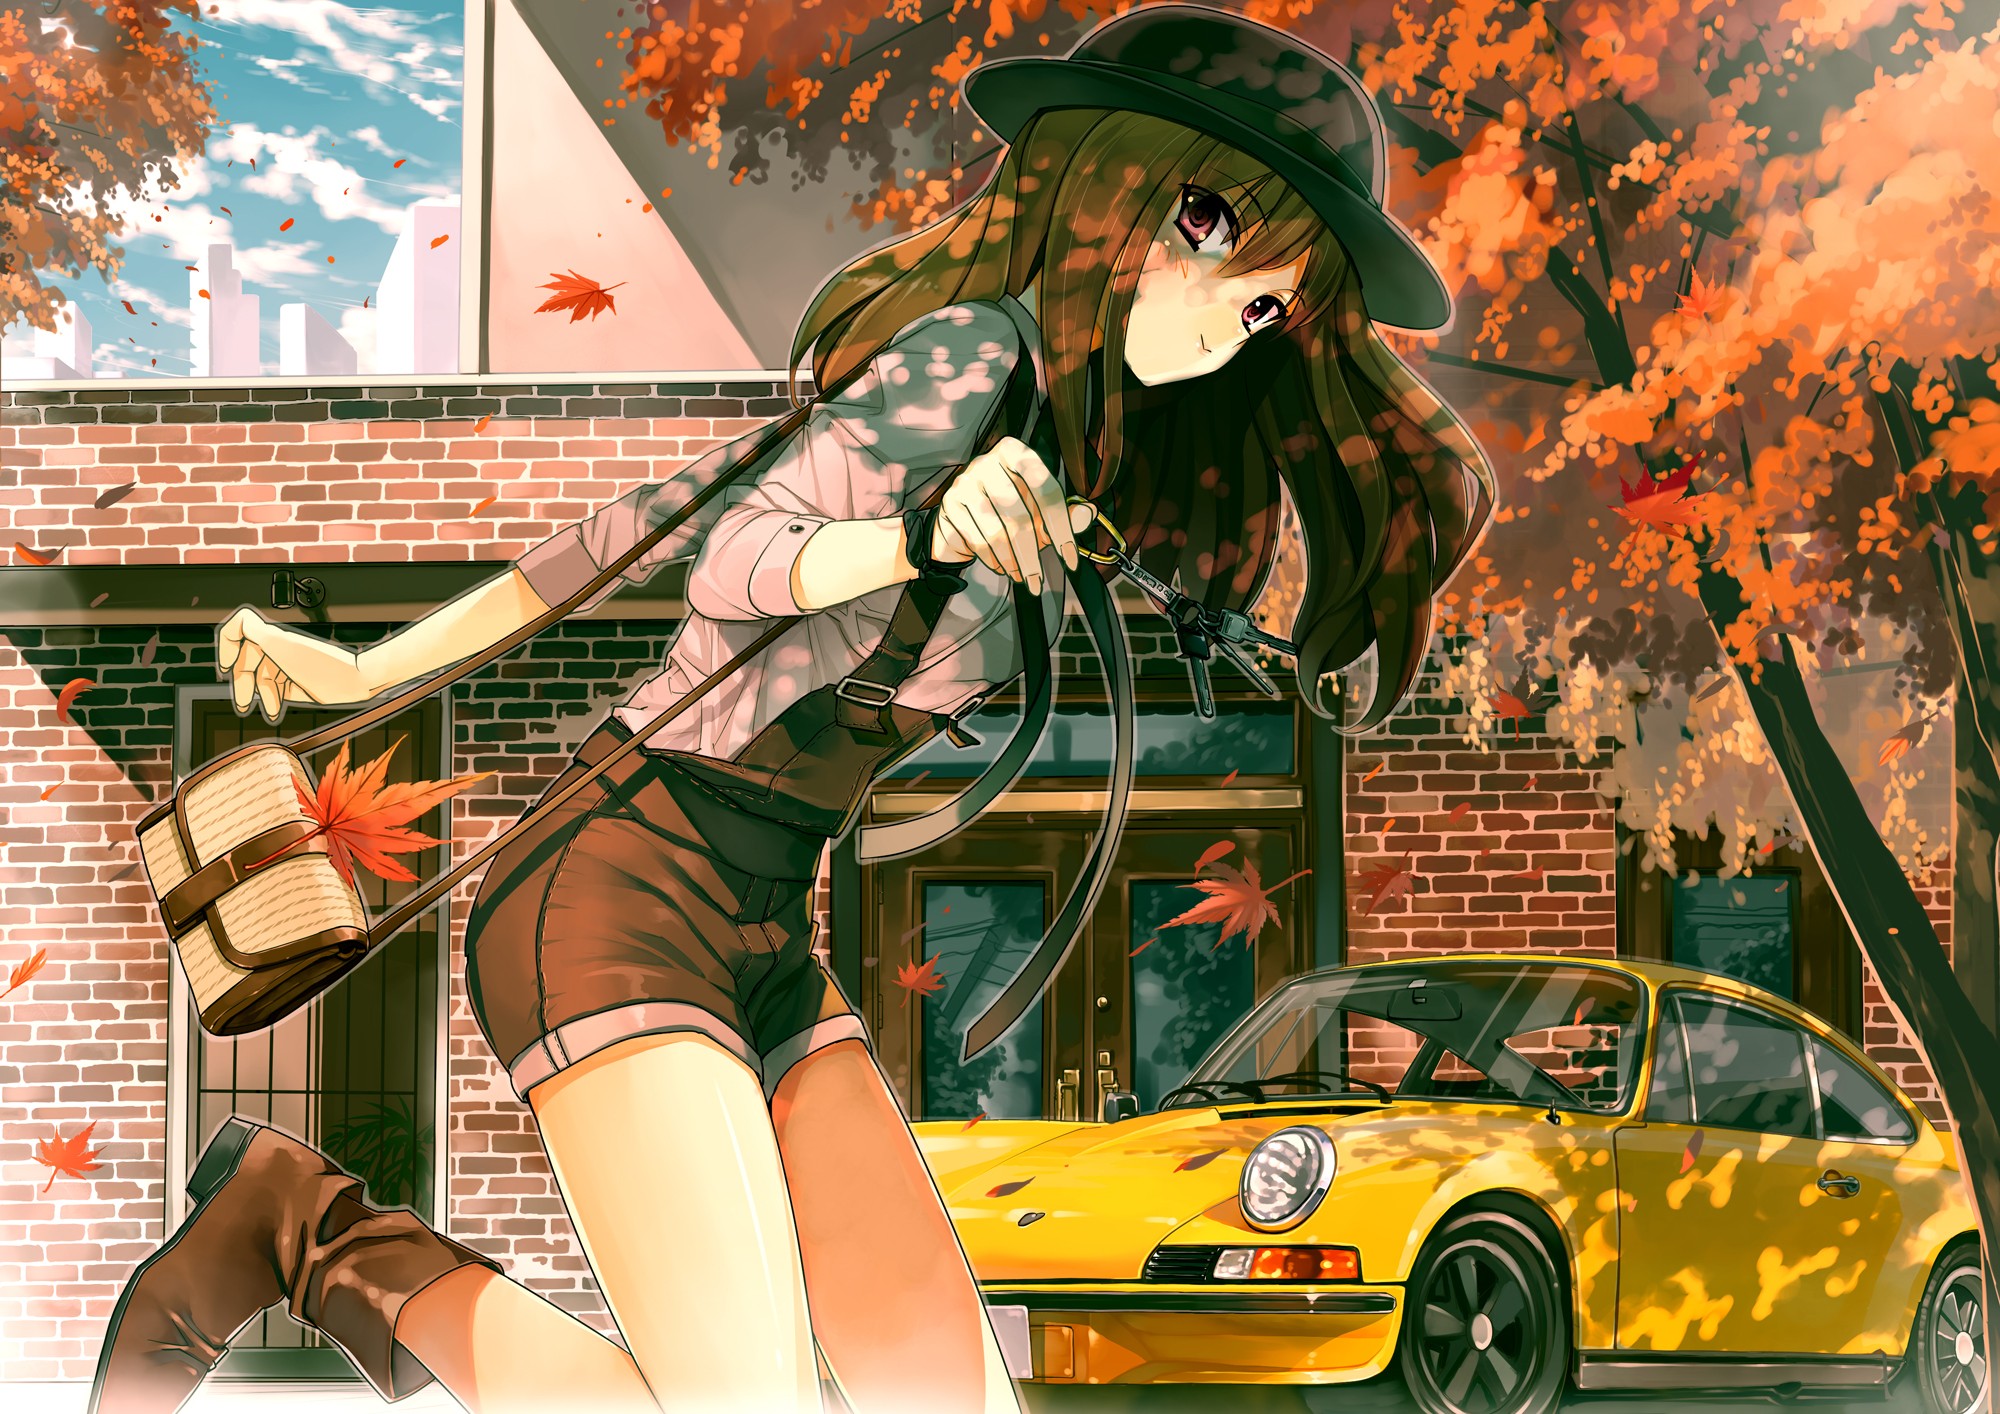 Anime 2000x1414 anime anime girls Porsche Porsche 911 hat long hair purple eyes car yellow cars Pixiv women with hats keys vehicle brunette women with cars